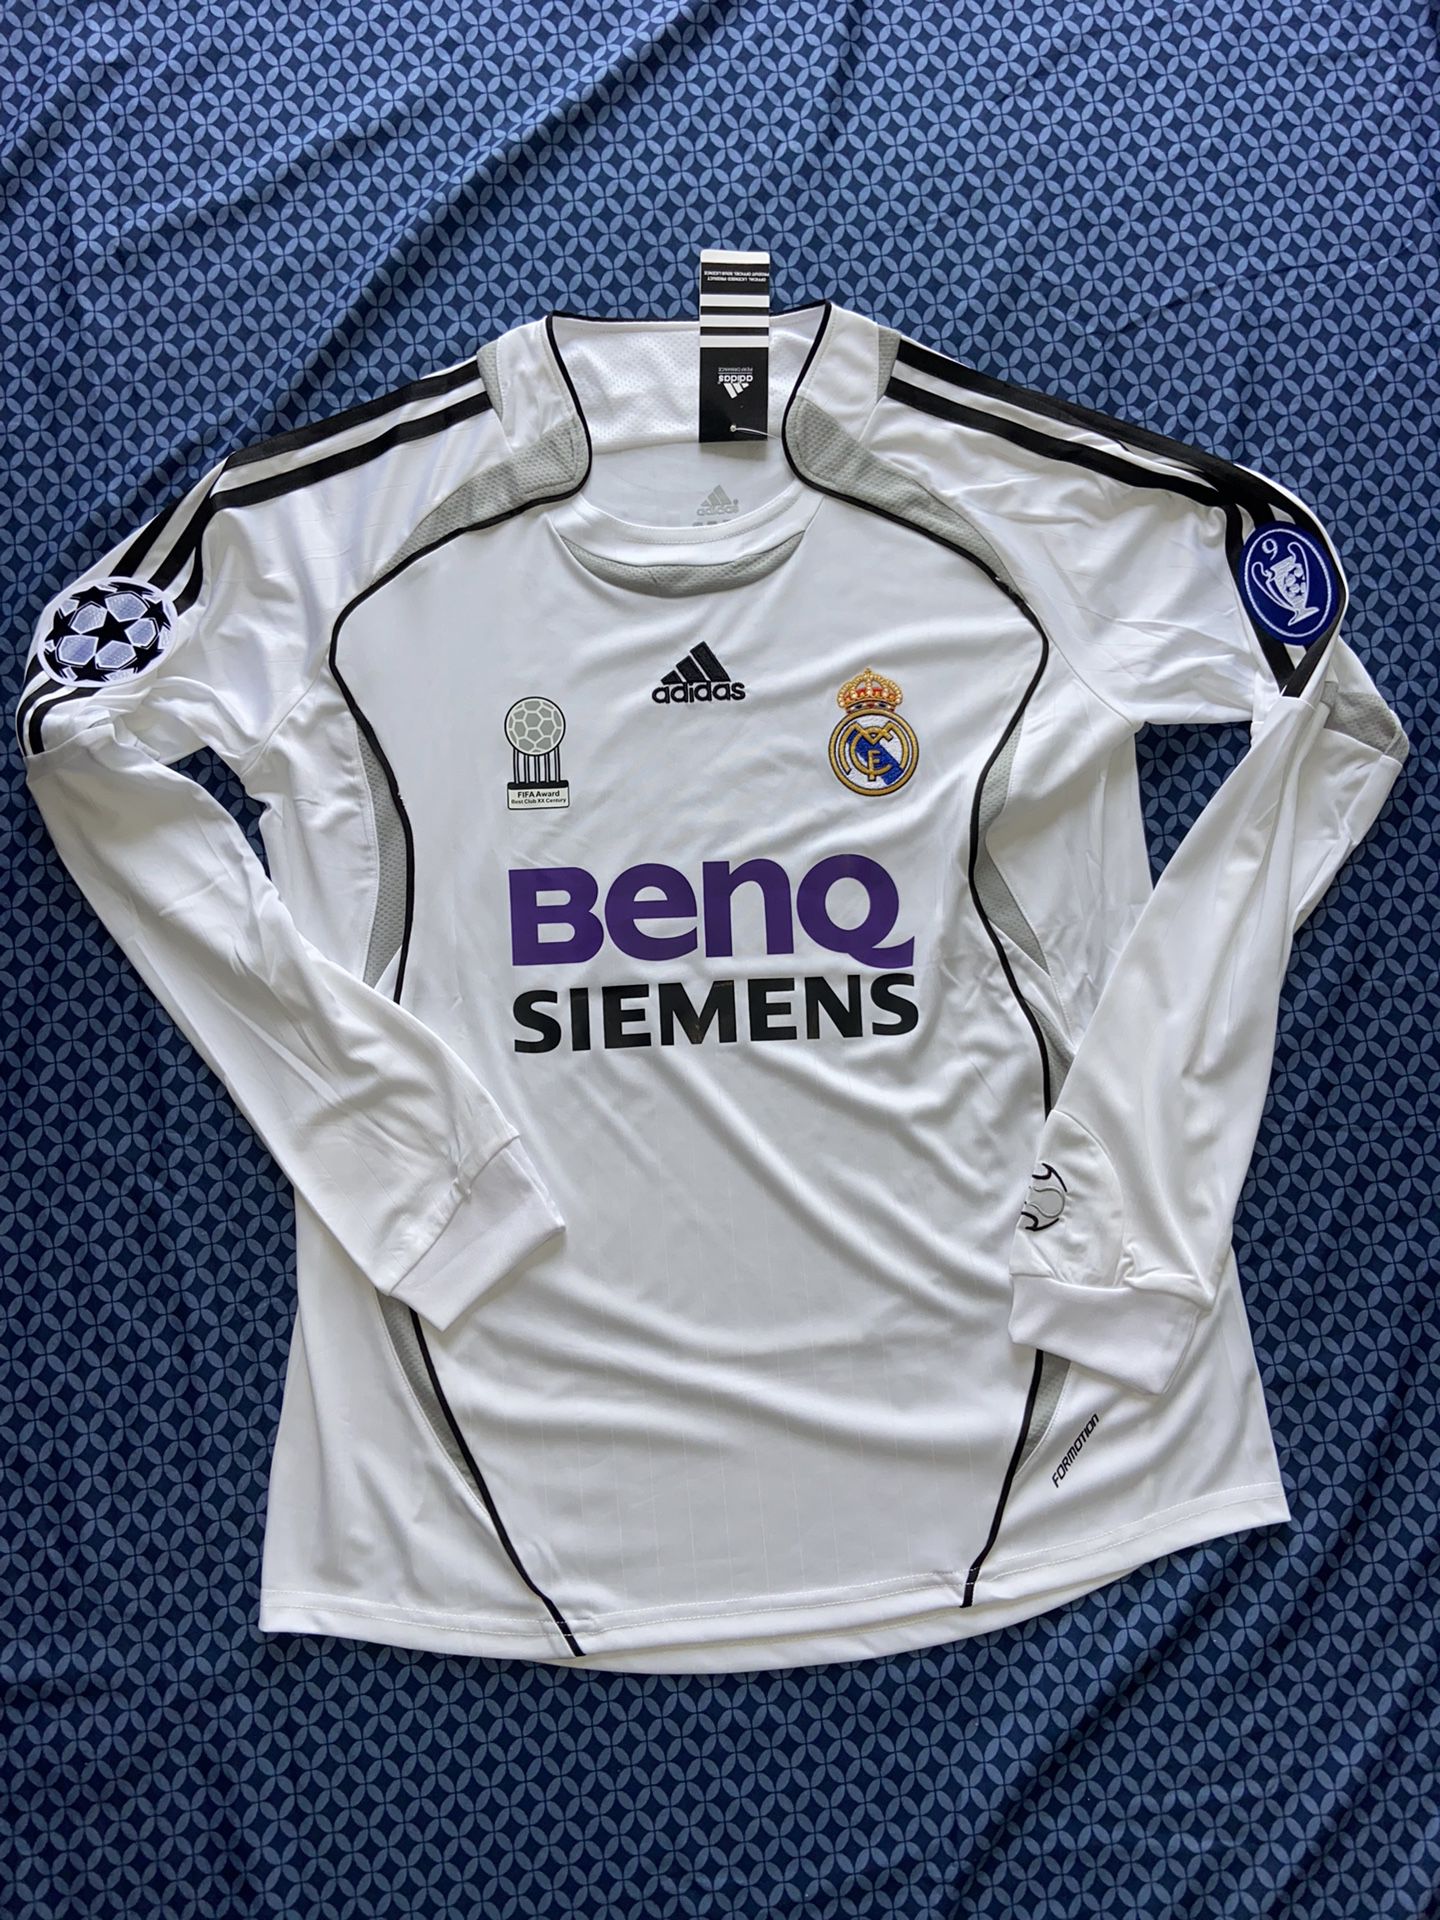 Jersey Soccer Real Madrid Ronaldo Camiseta Fútbol Playera Size S M L